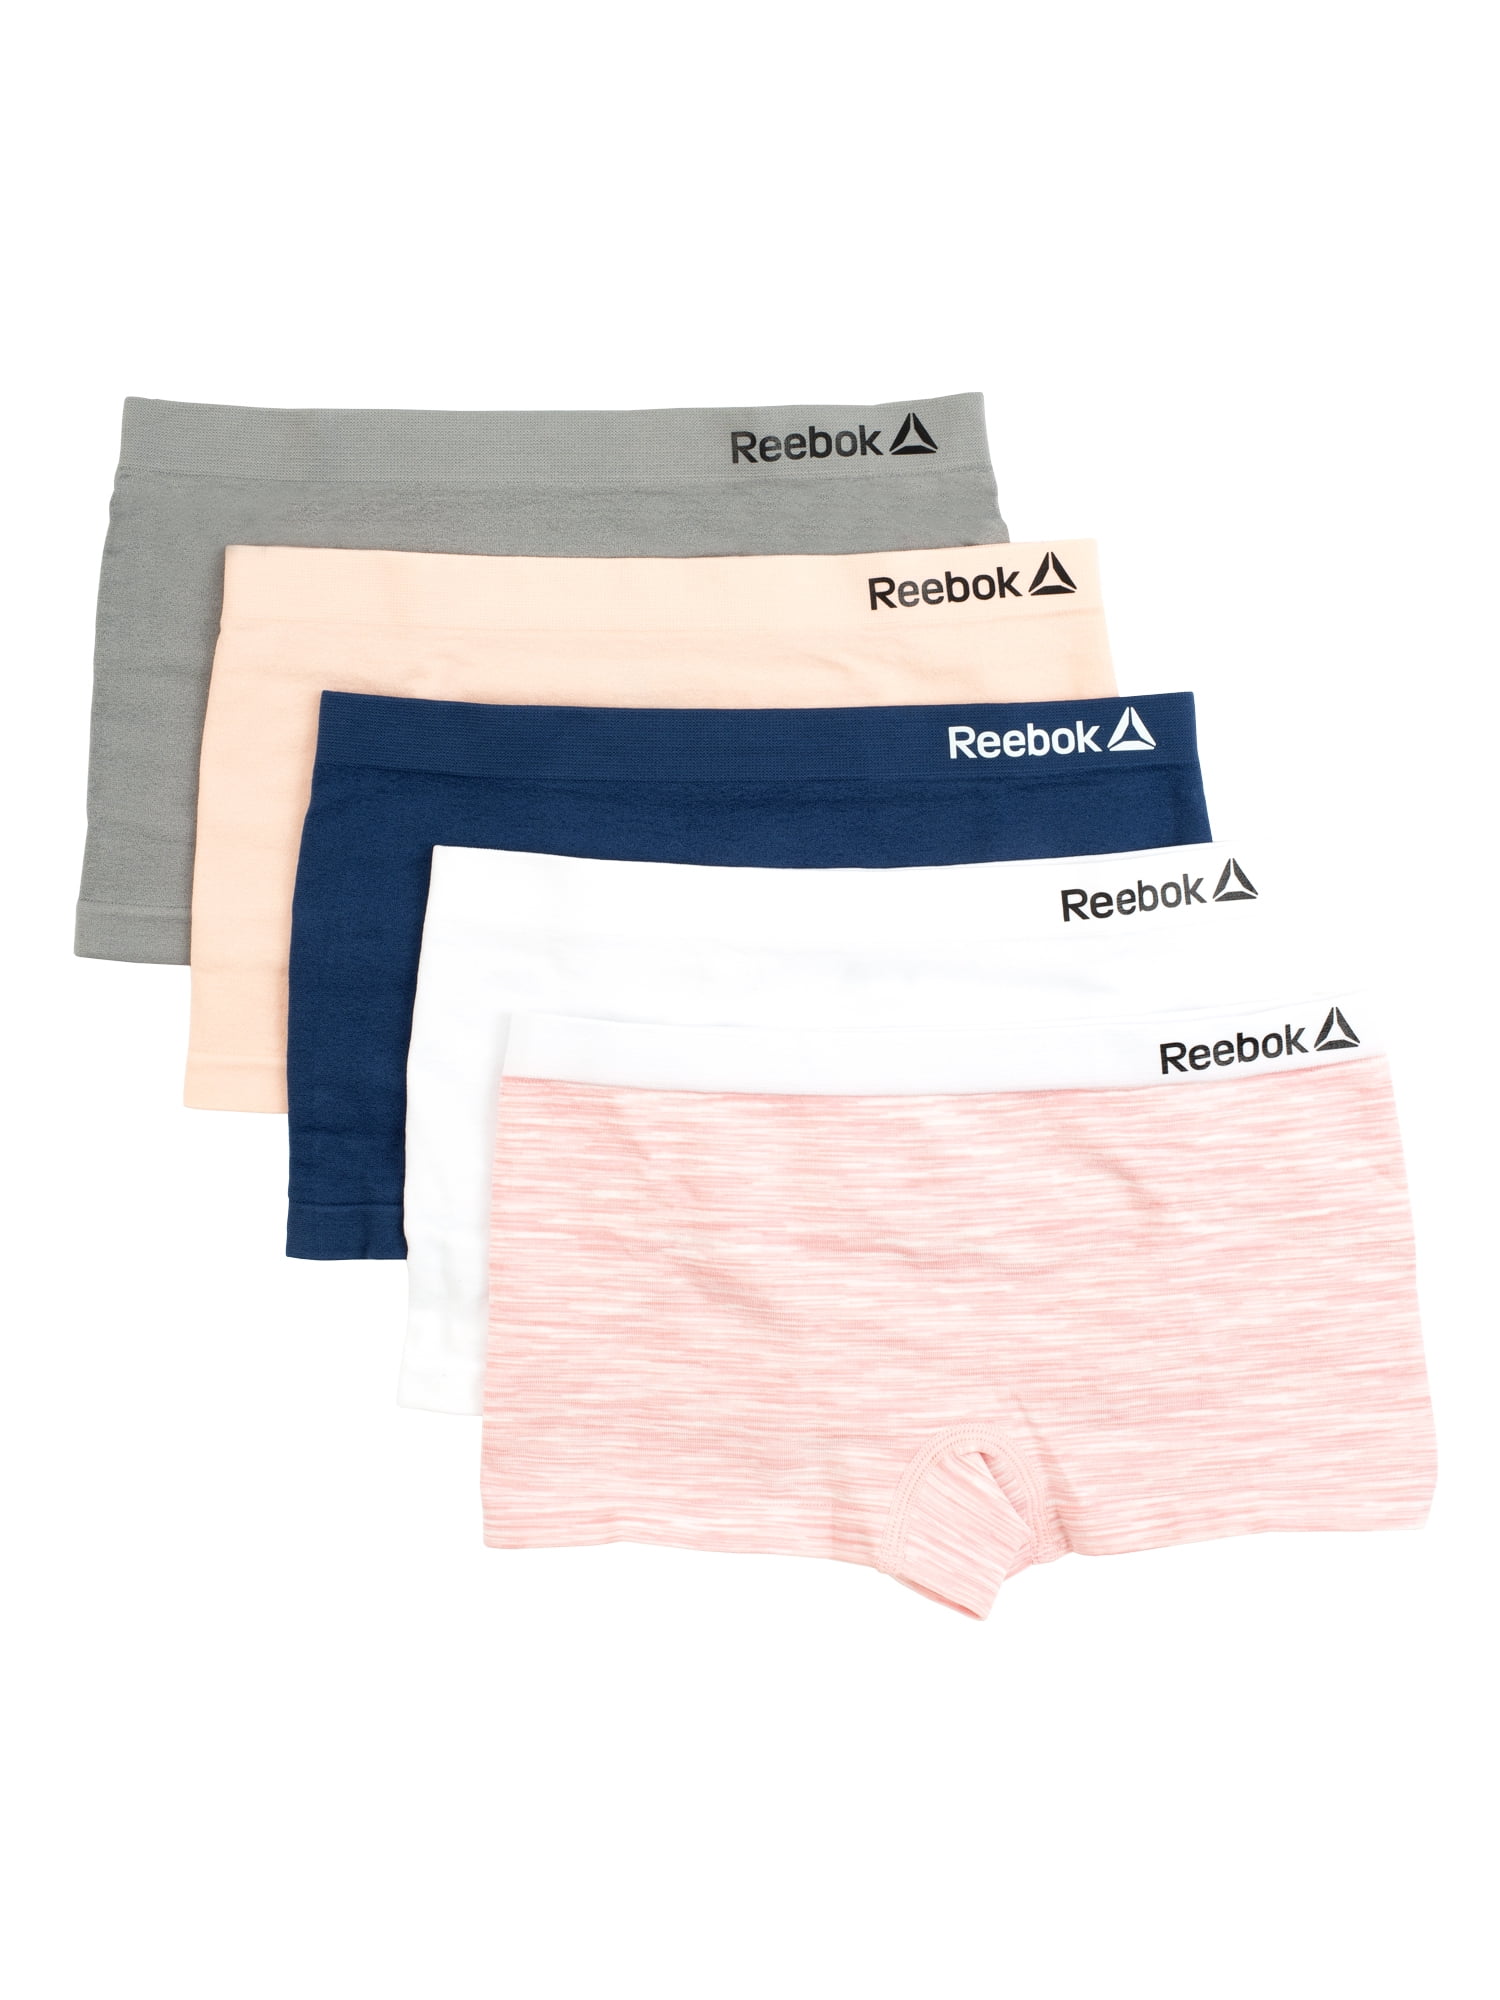 Reebok Girls Seamless Boyshort Panties Underwear, 5-Pack, Sizes S